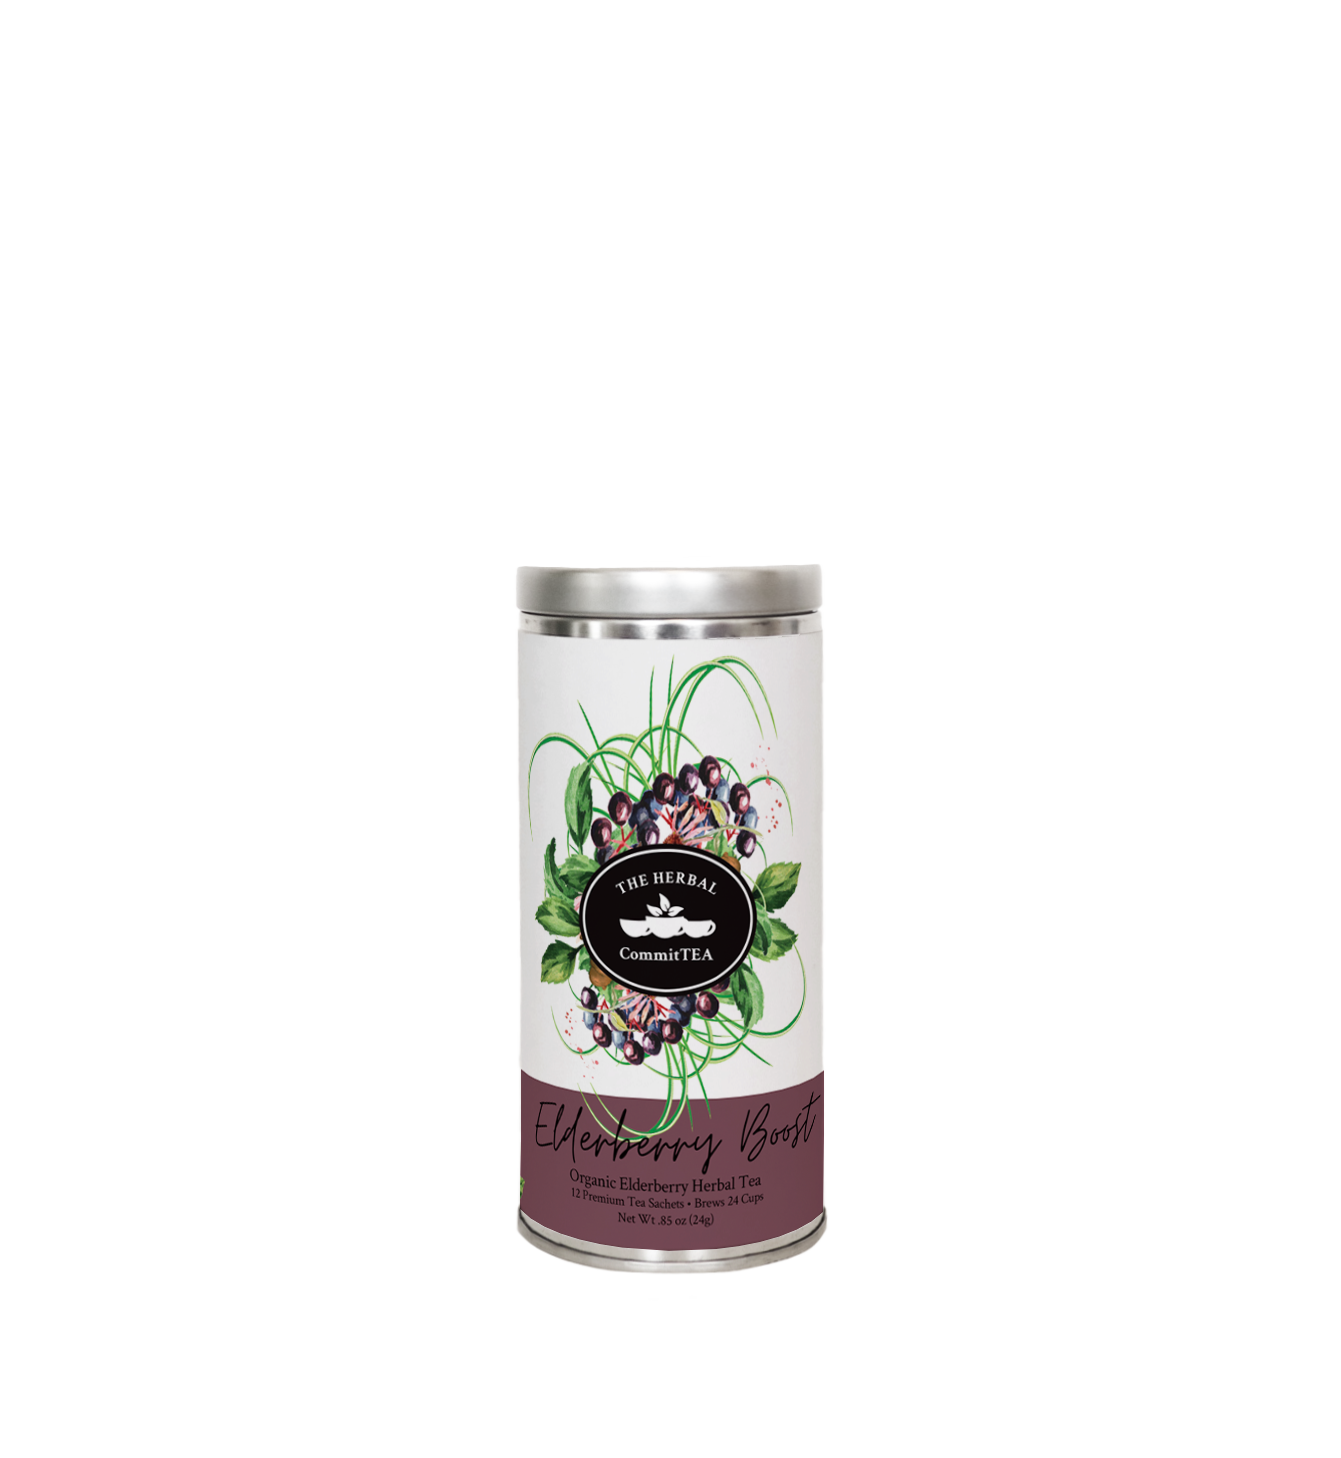 Elderberry Boost - Organic Elderberry Herbal Tea